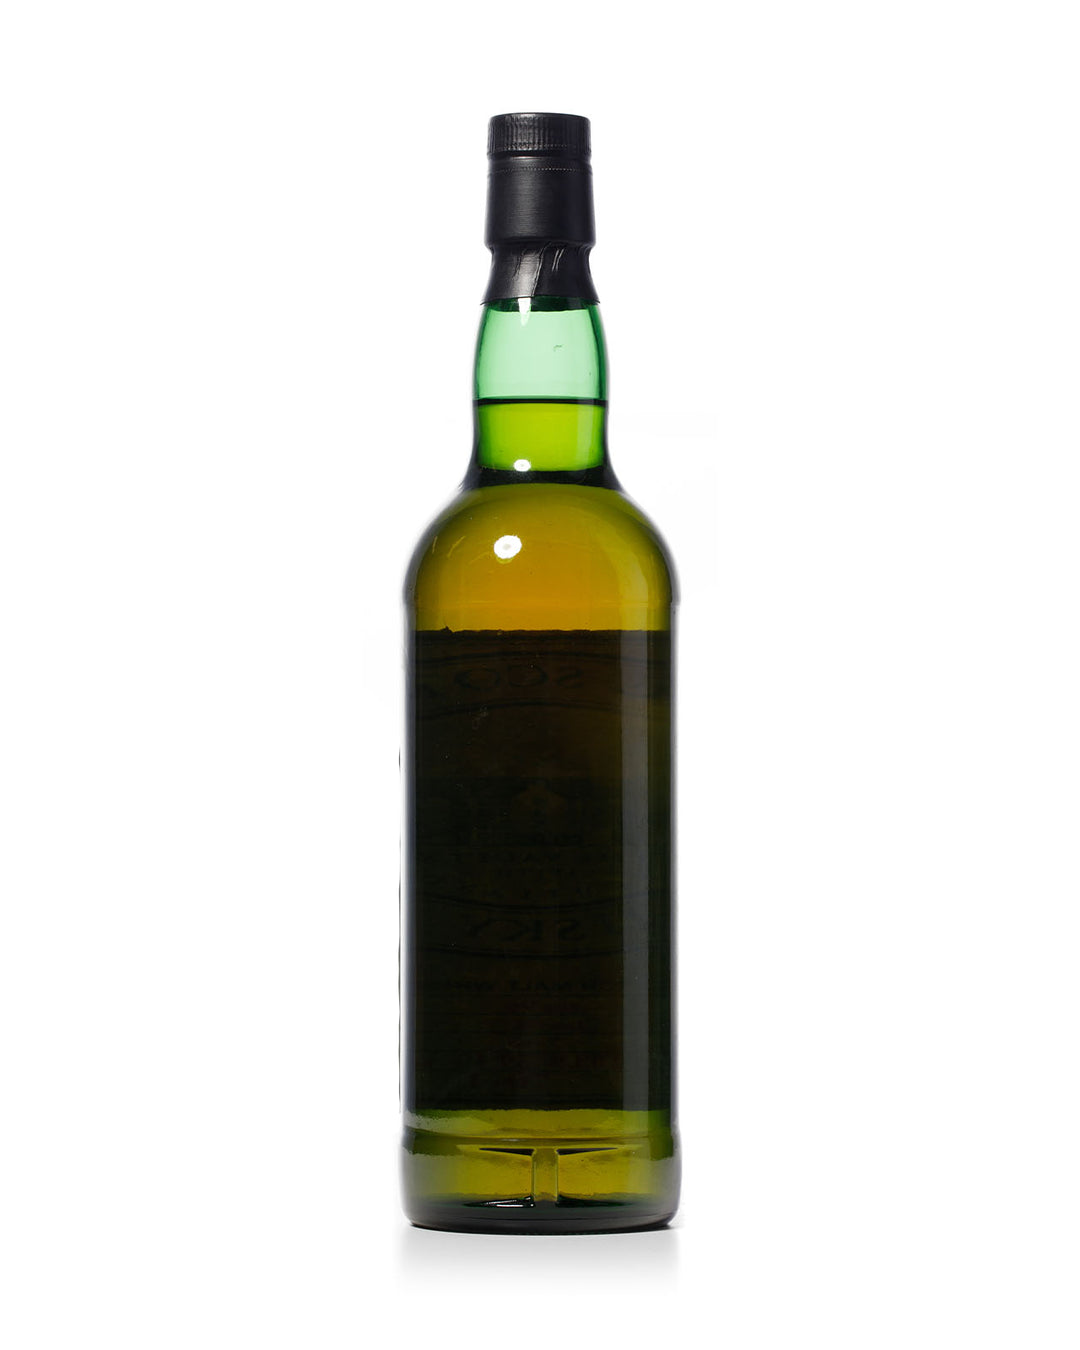 Arran 1996 7 Year Old Scotch Malt Whisky Society SMWS 121.1 Bottled 2004